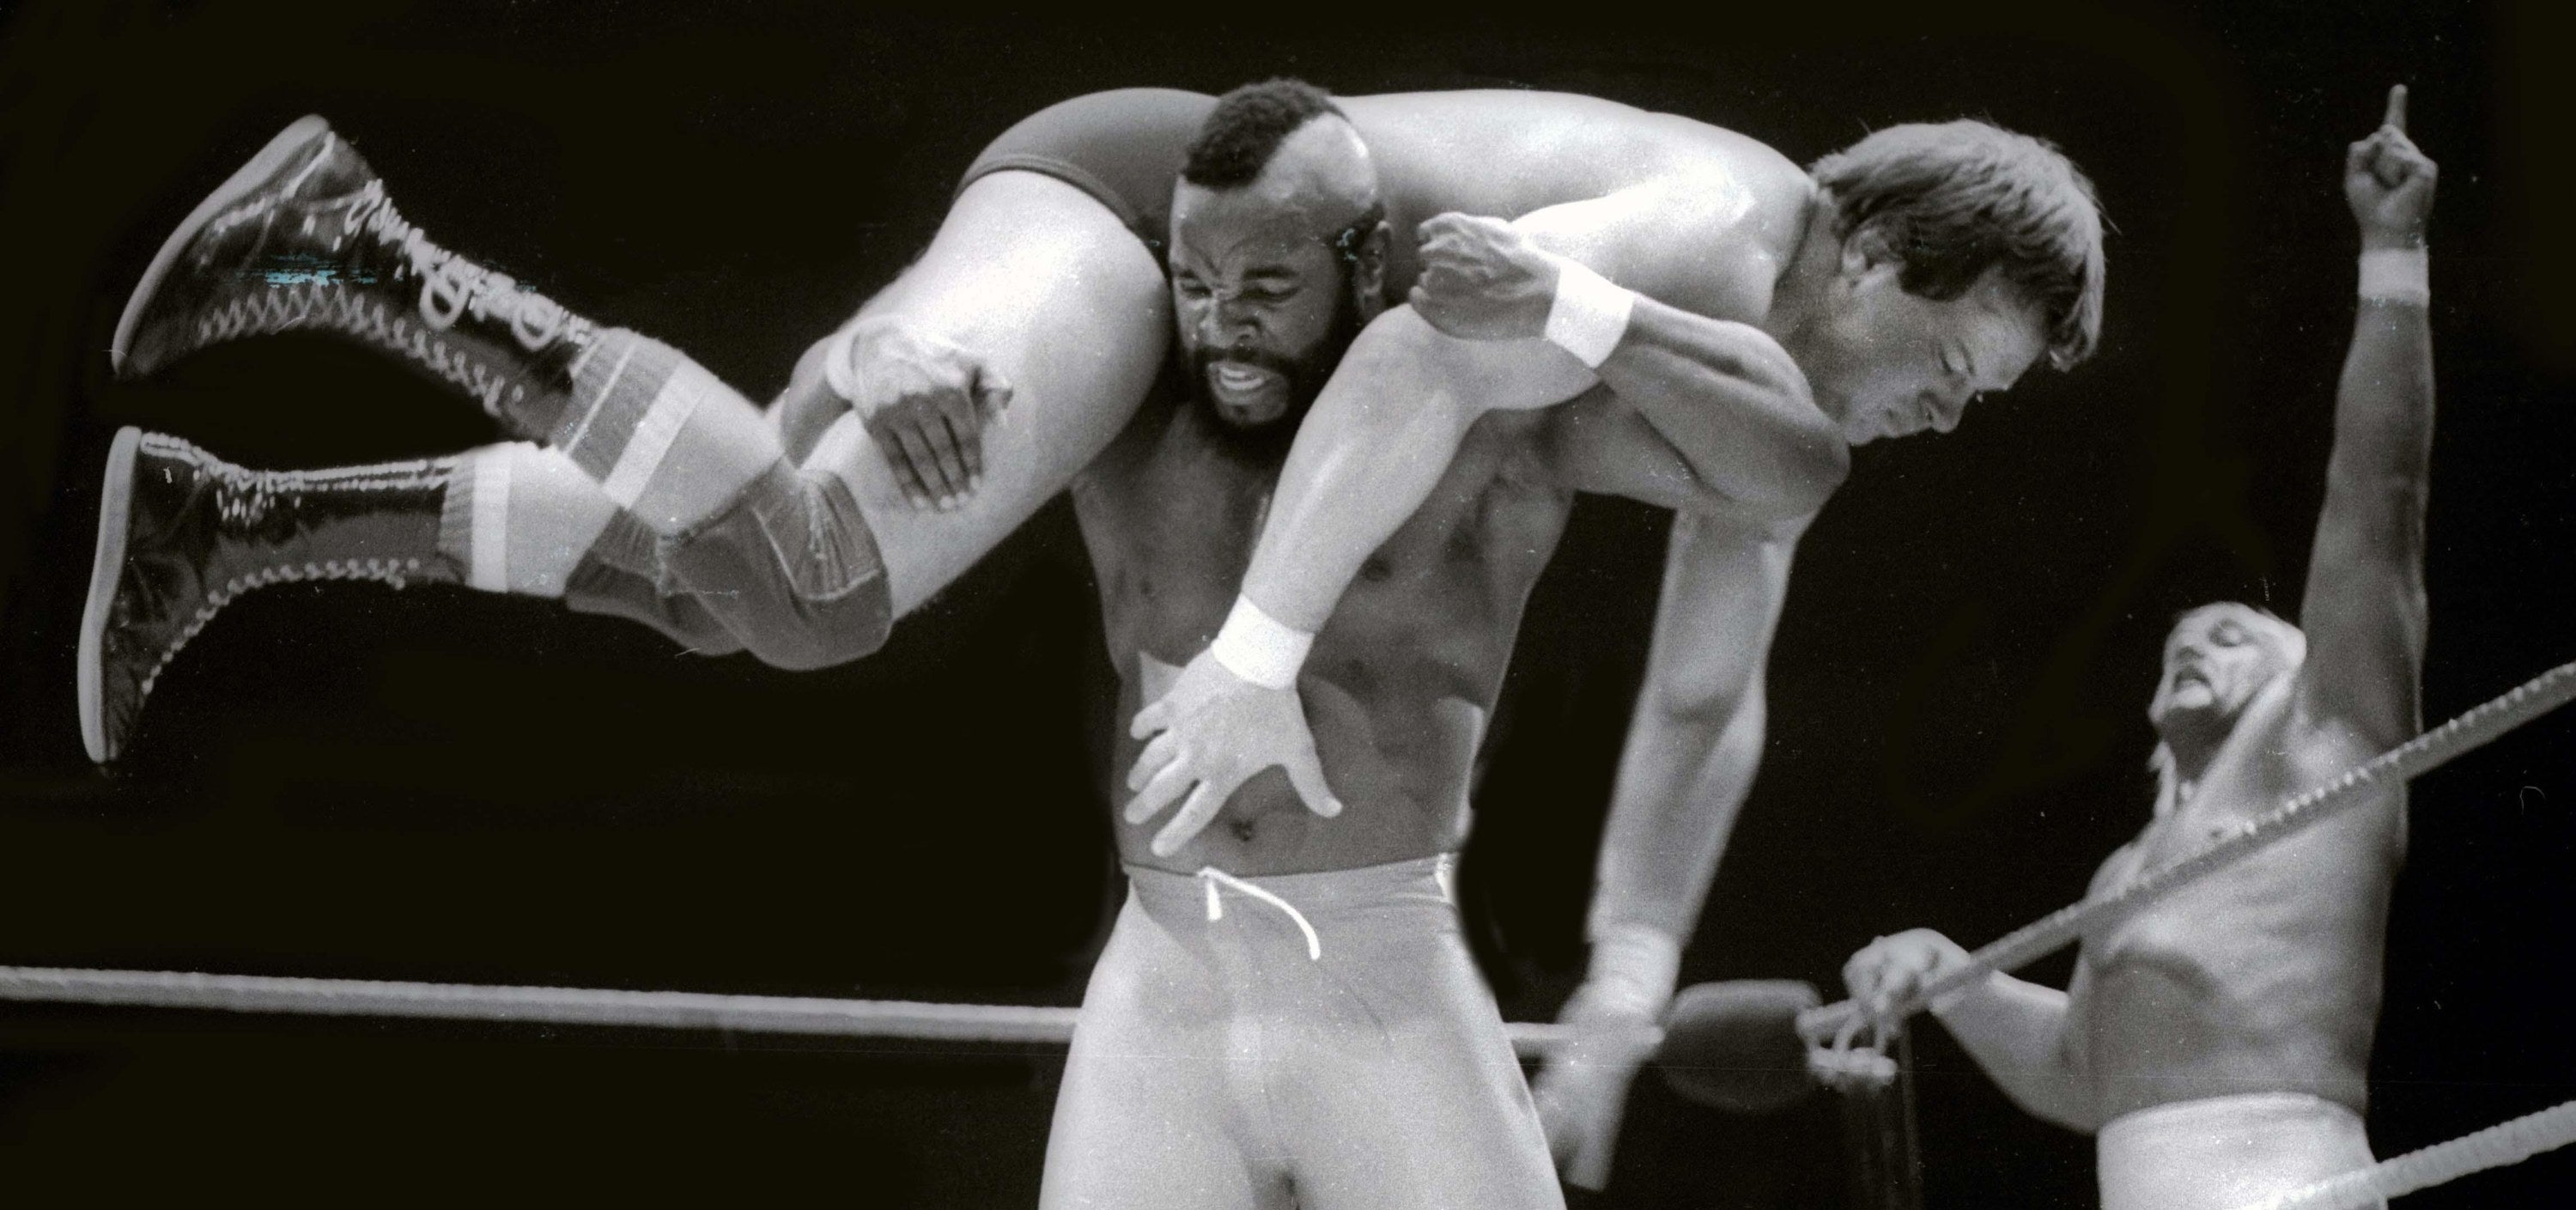 Roddy Piper, Mr T and Hulk Hogan at Wrestlemania in Madison Square Garden